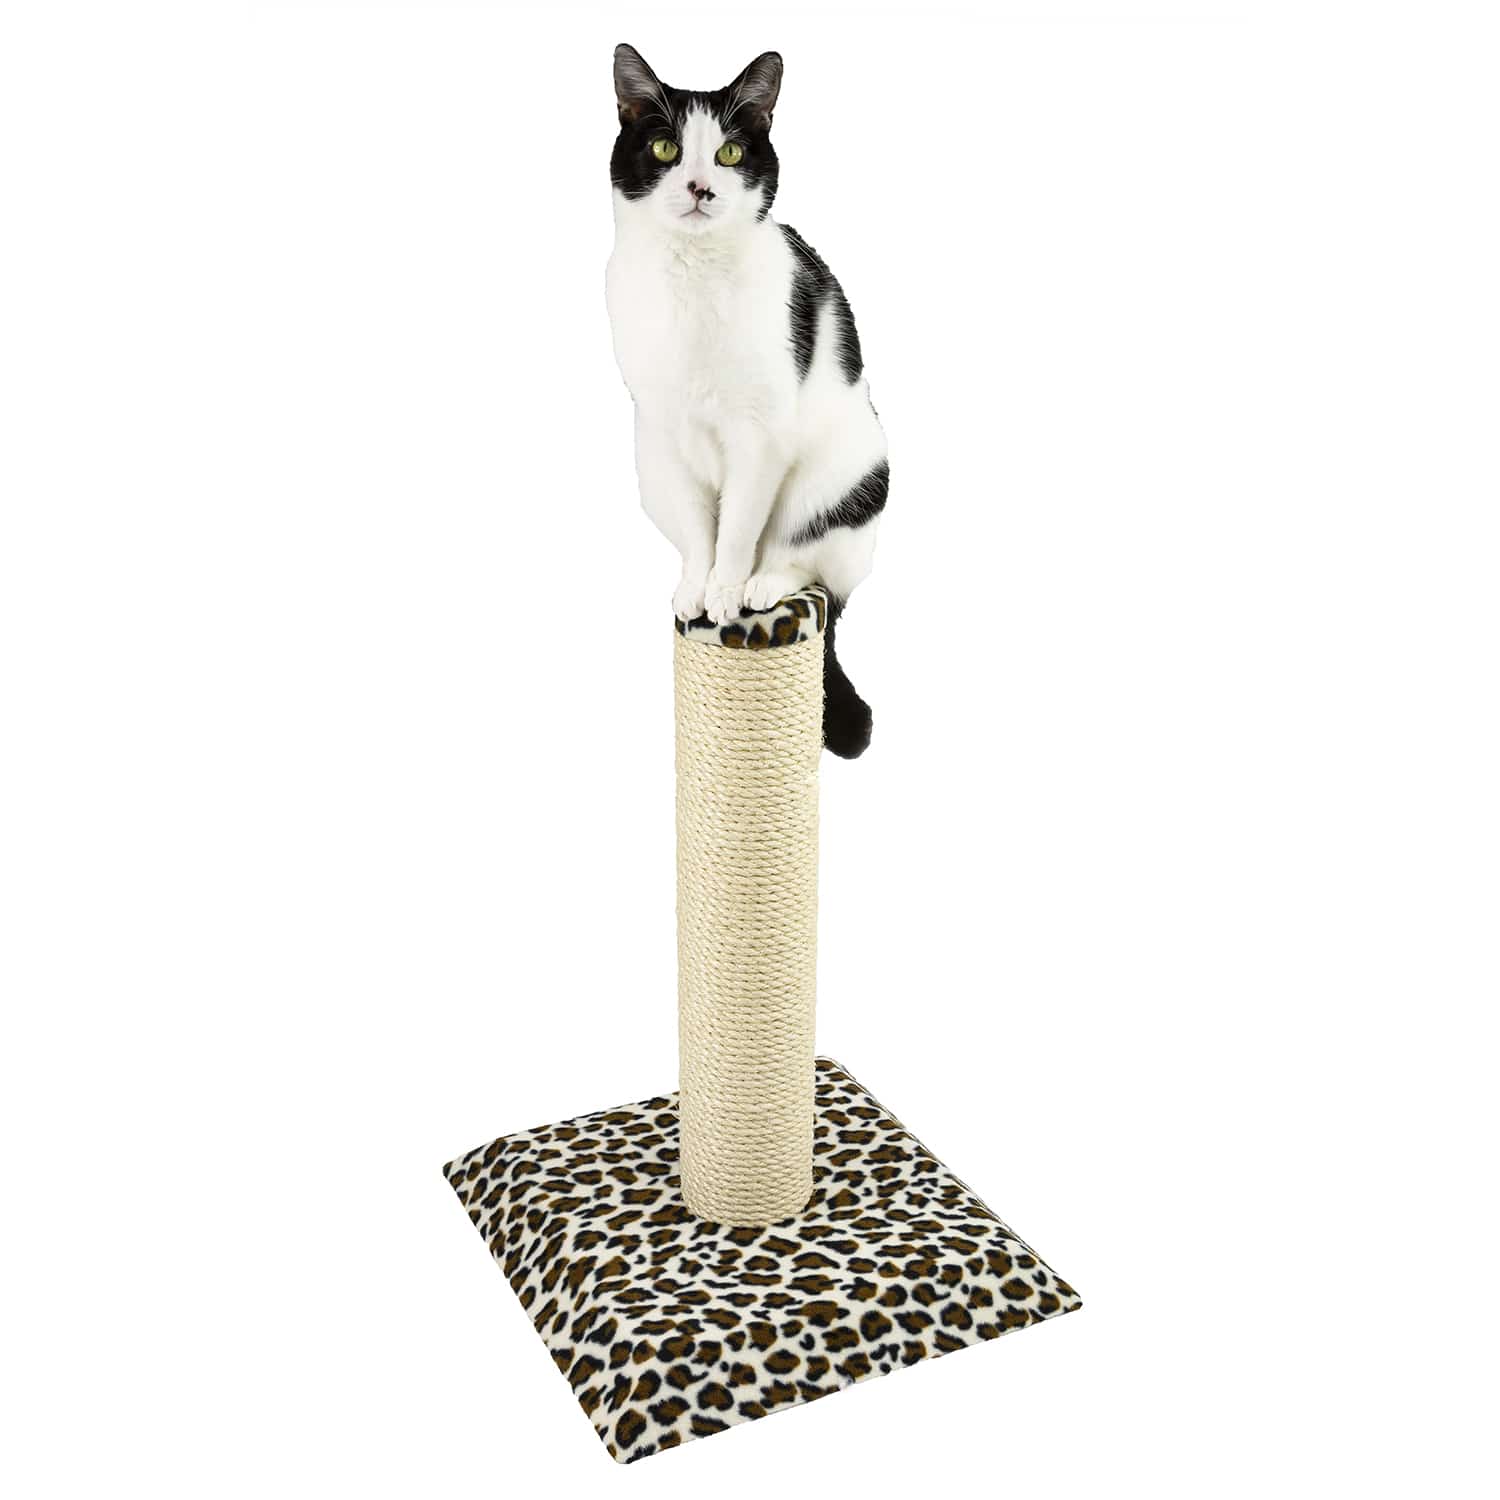 Furni Saver | buy cat climbing posts online | buy cat climbing posts online uk - Cosy Posts